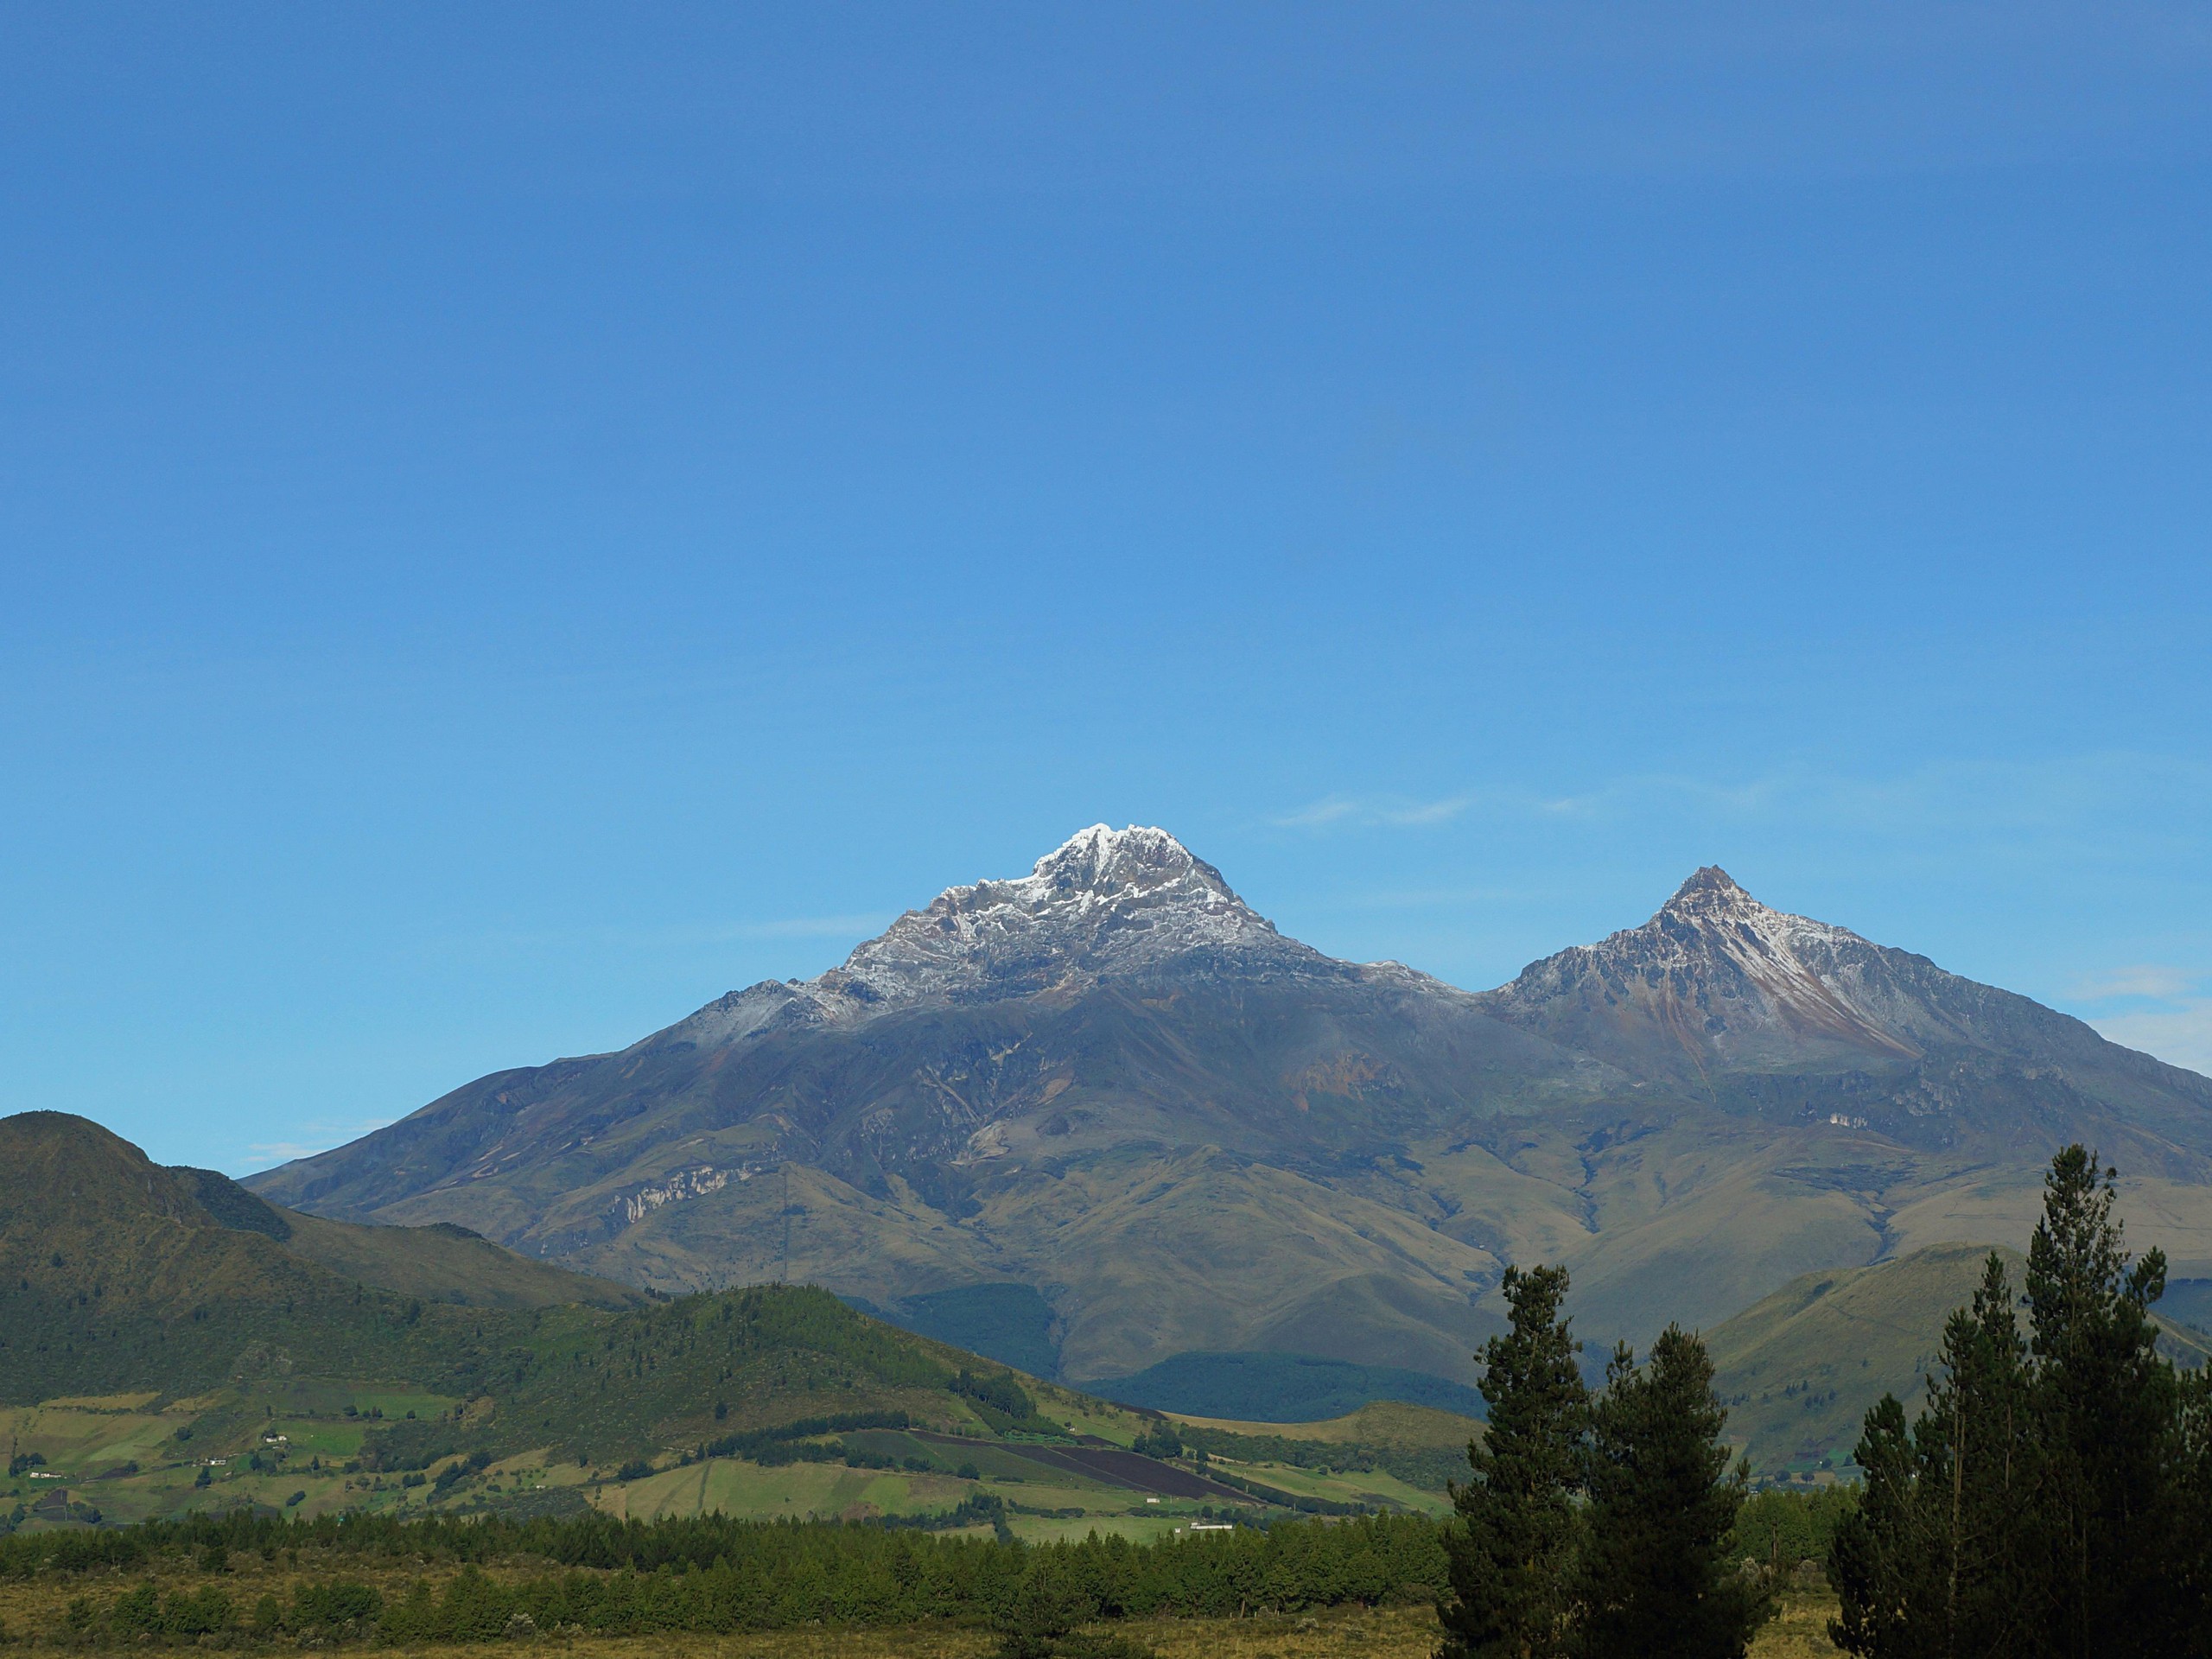 Approaching two beautiful peaks in Ecuador